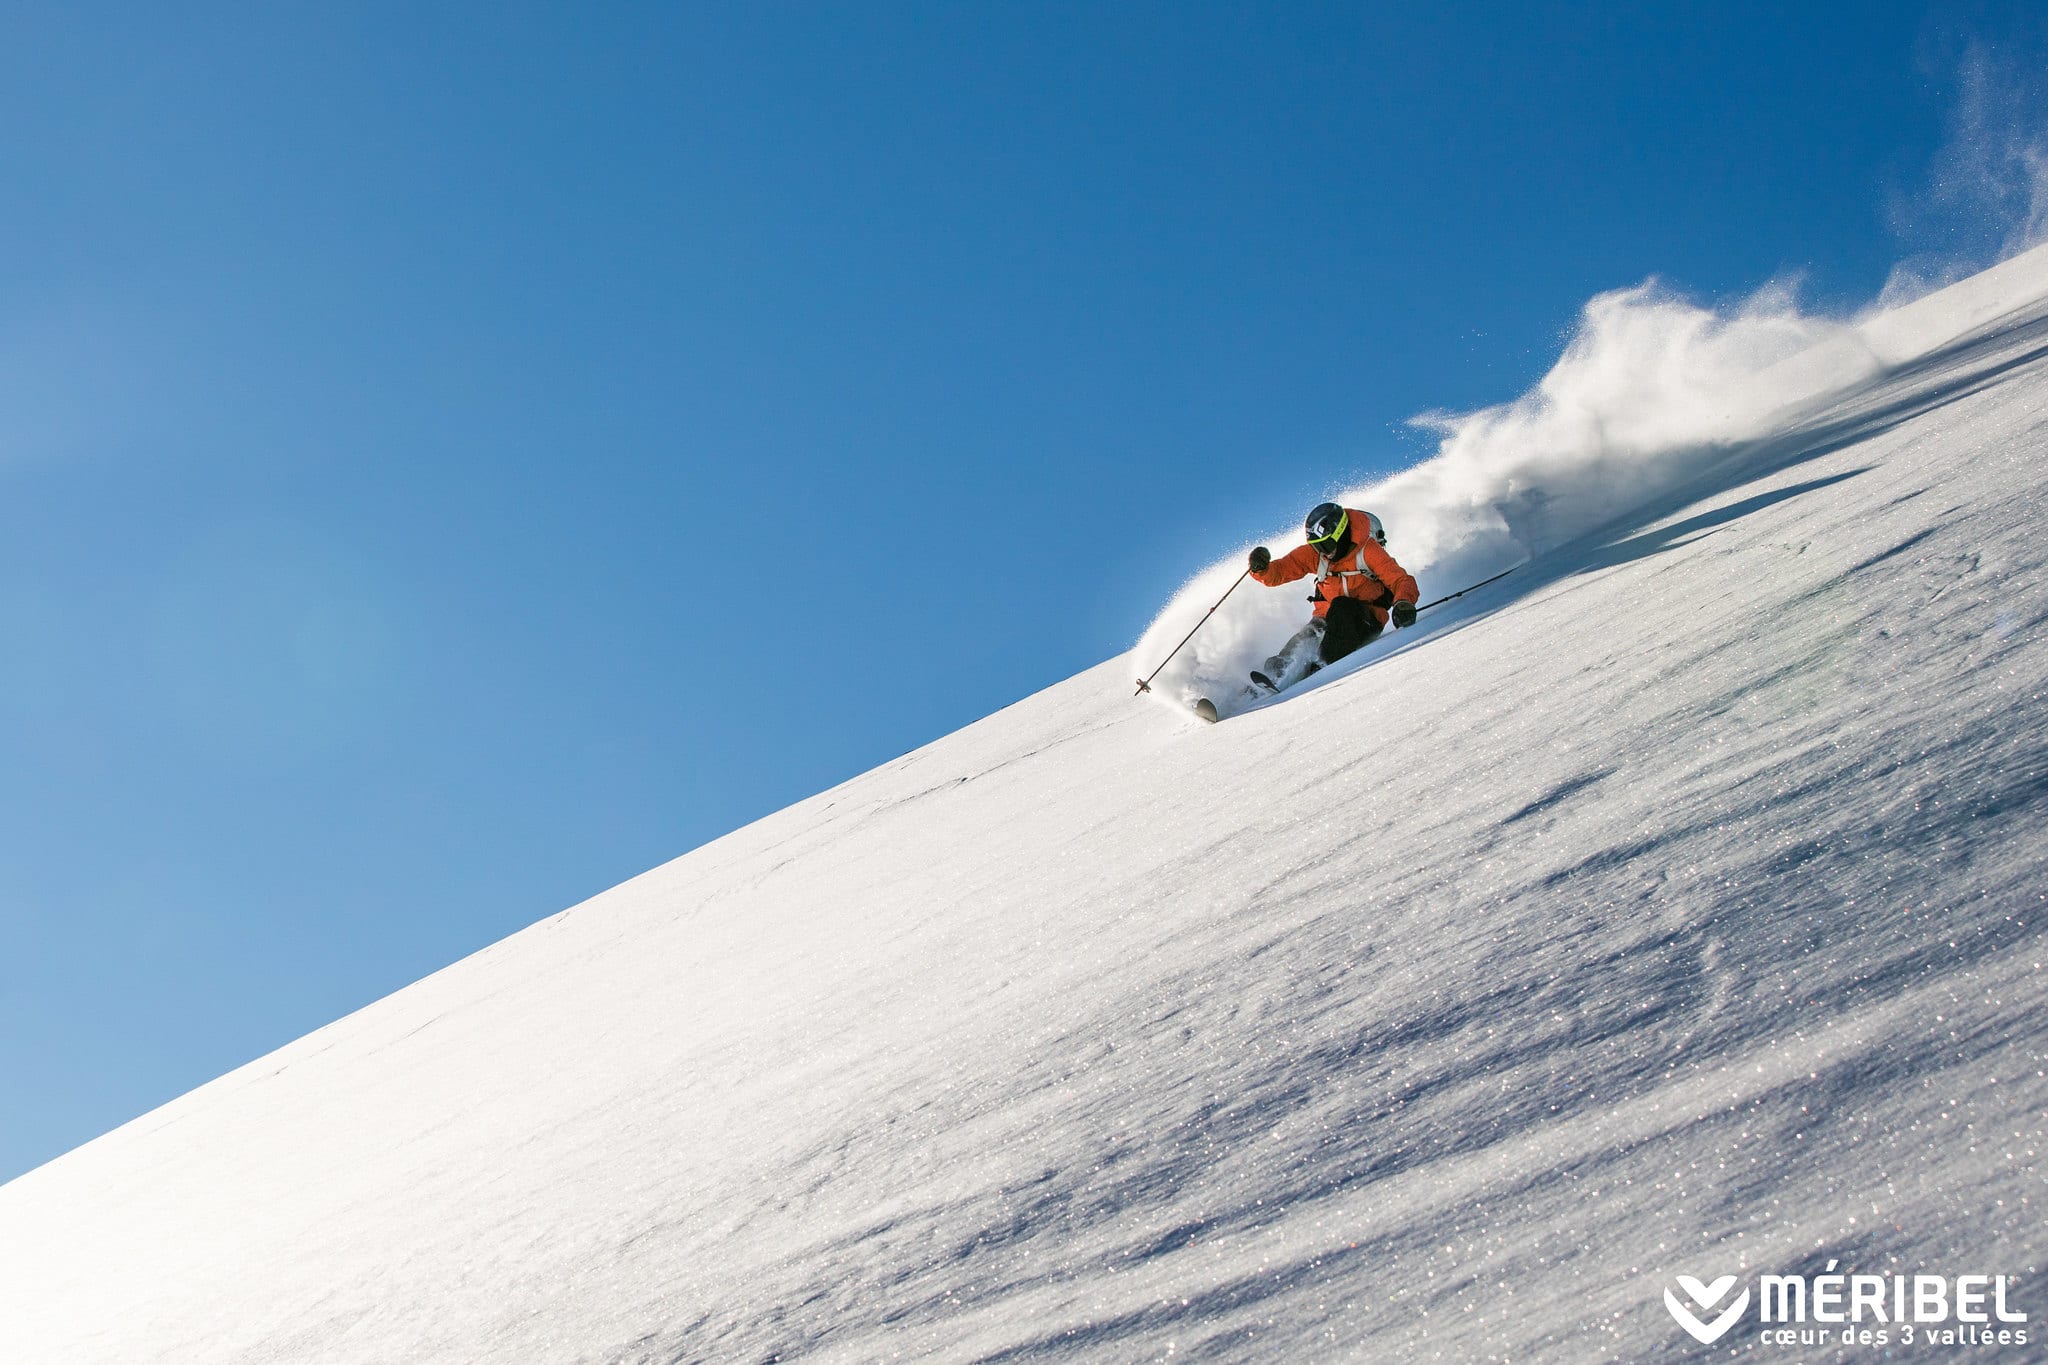 Skiing Powder In Meribel From Your Luxury Ski Chalet